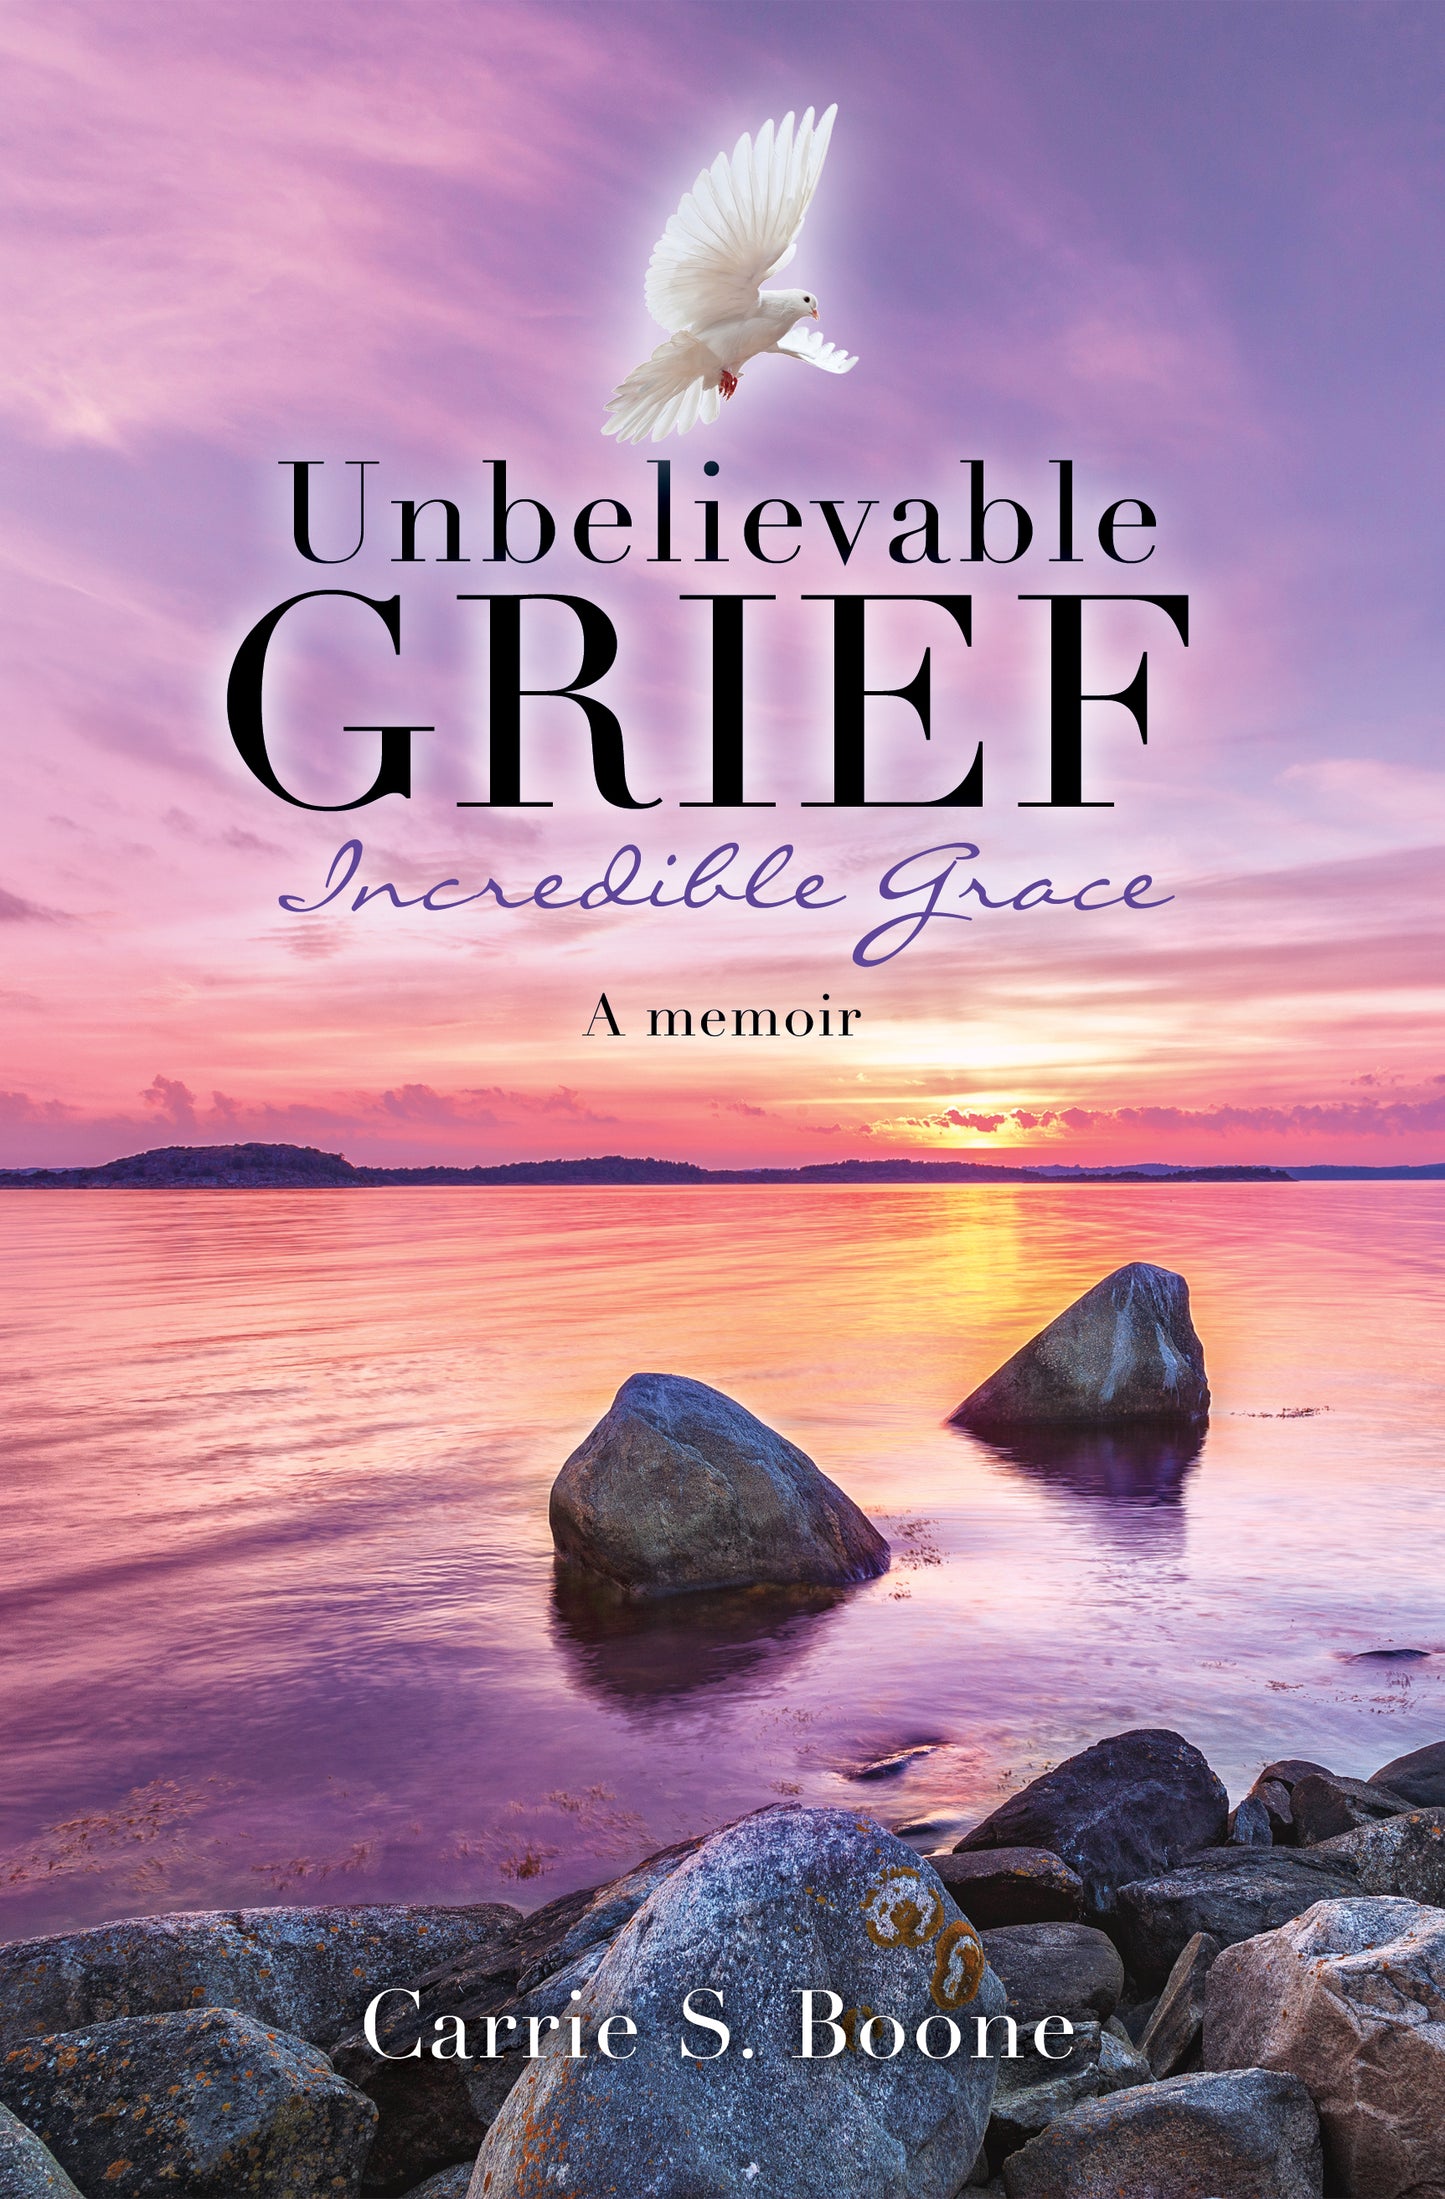 Book Bundle#3 Unbelievable Grief: Incredible Grace